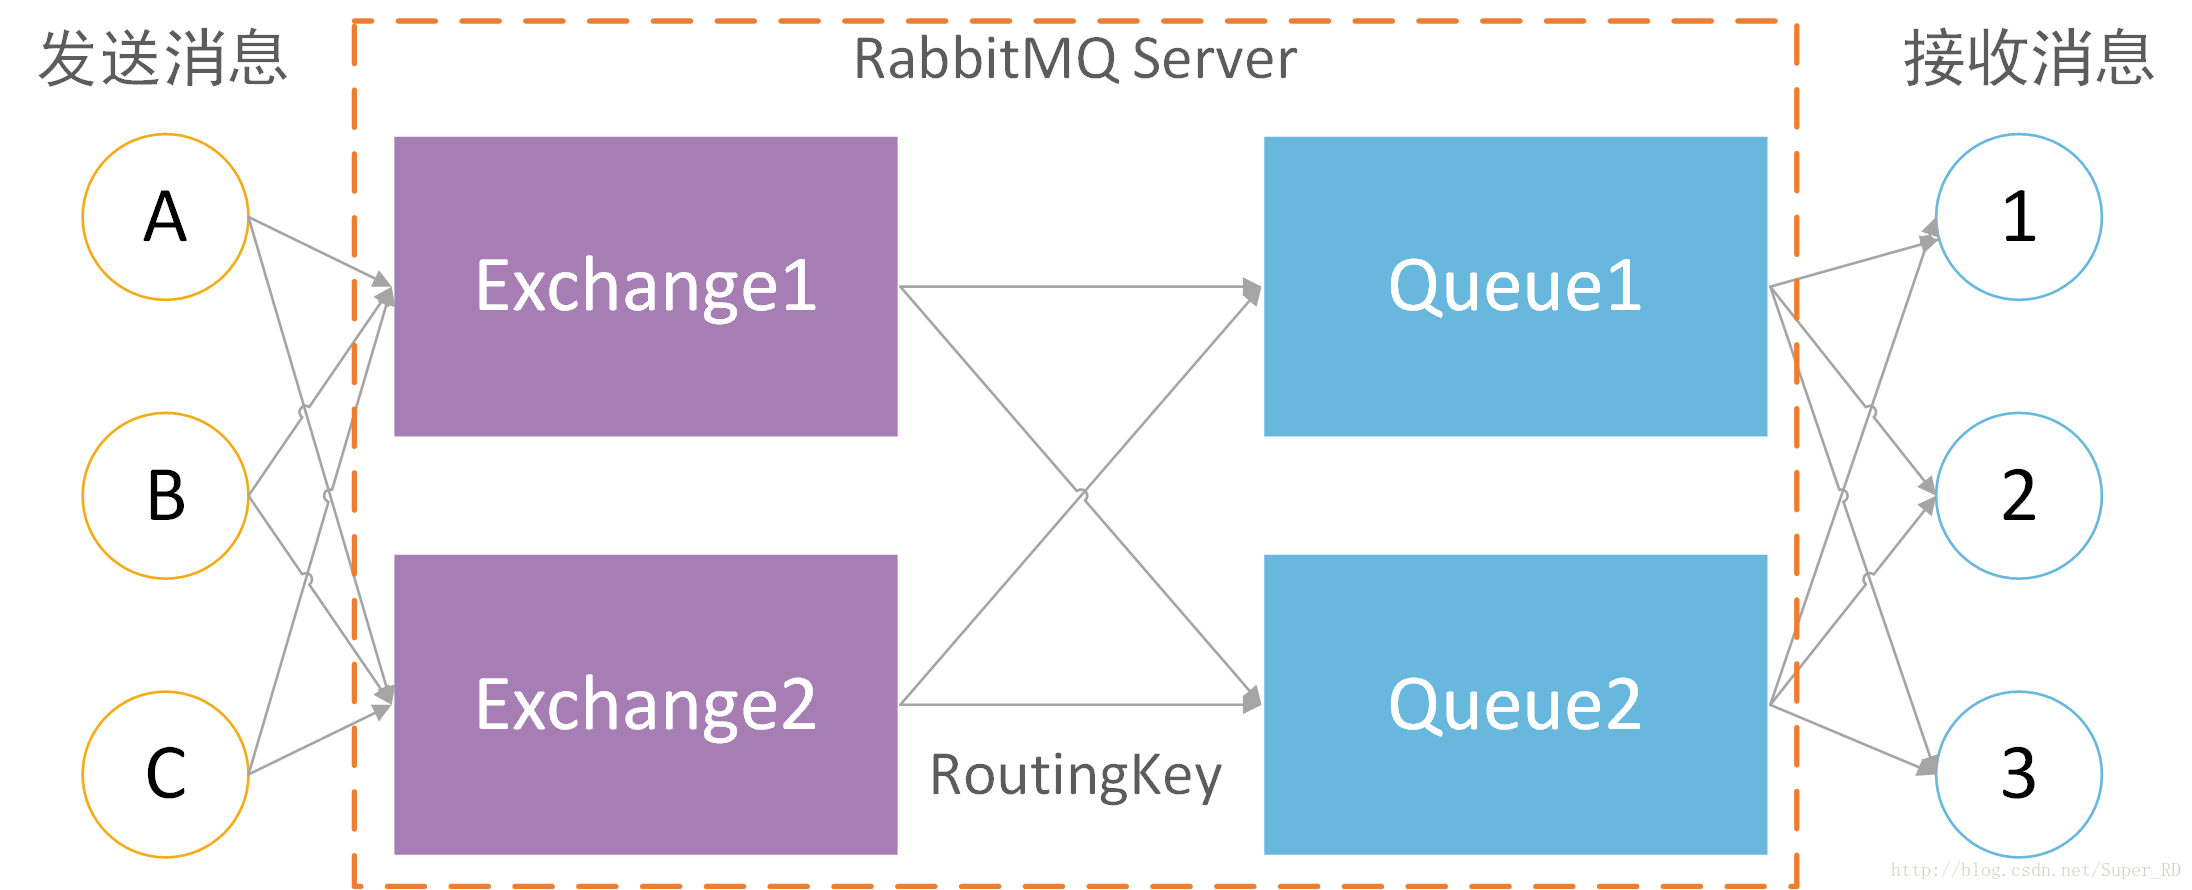 RabbitMQ應用架構